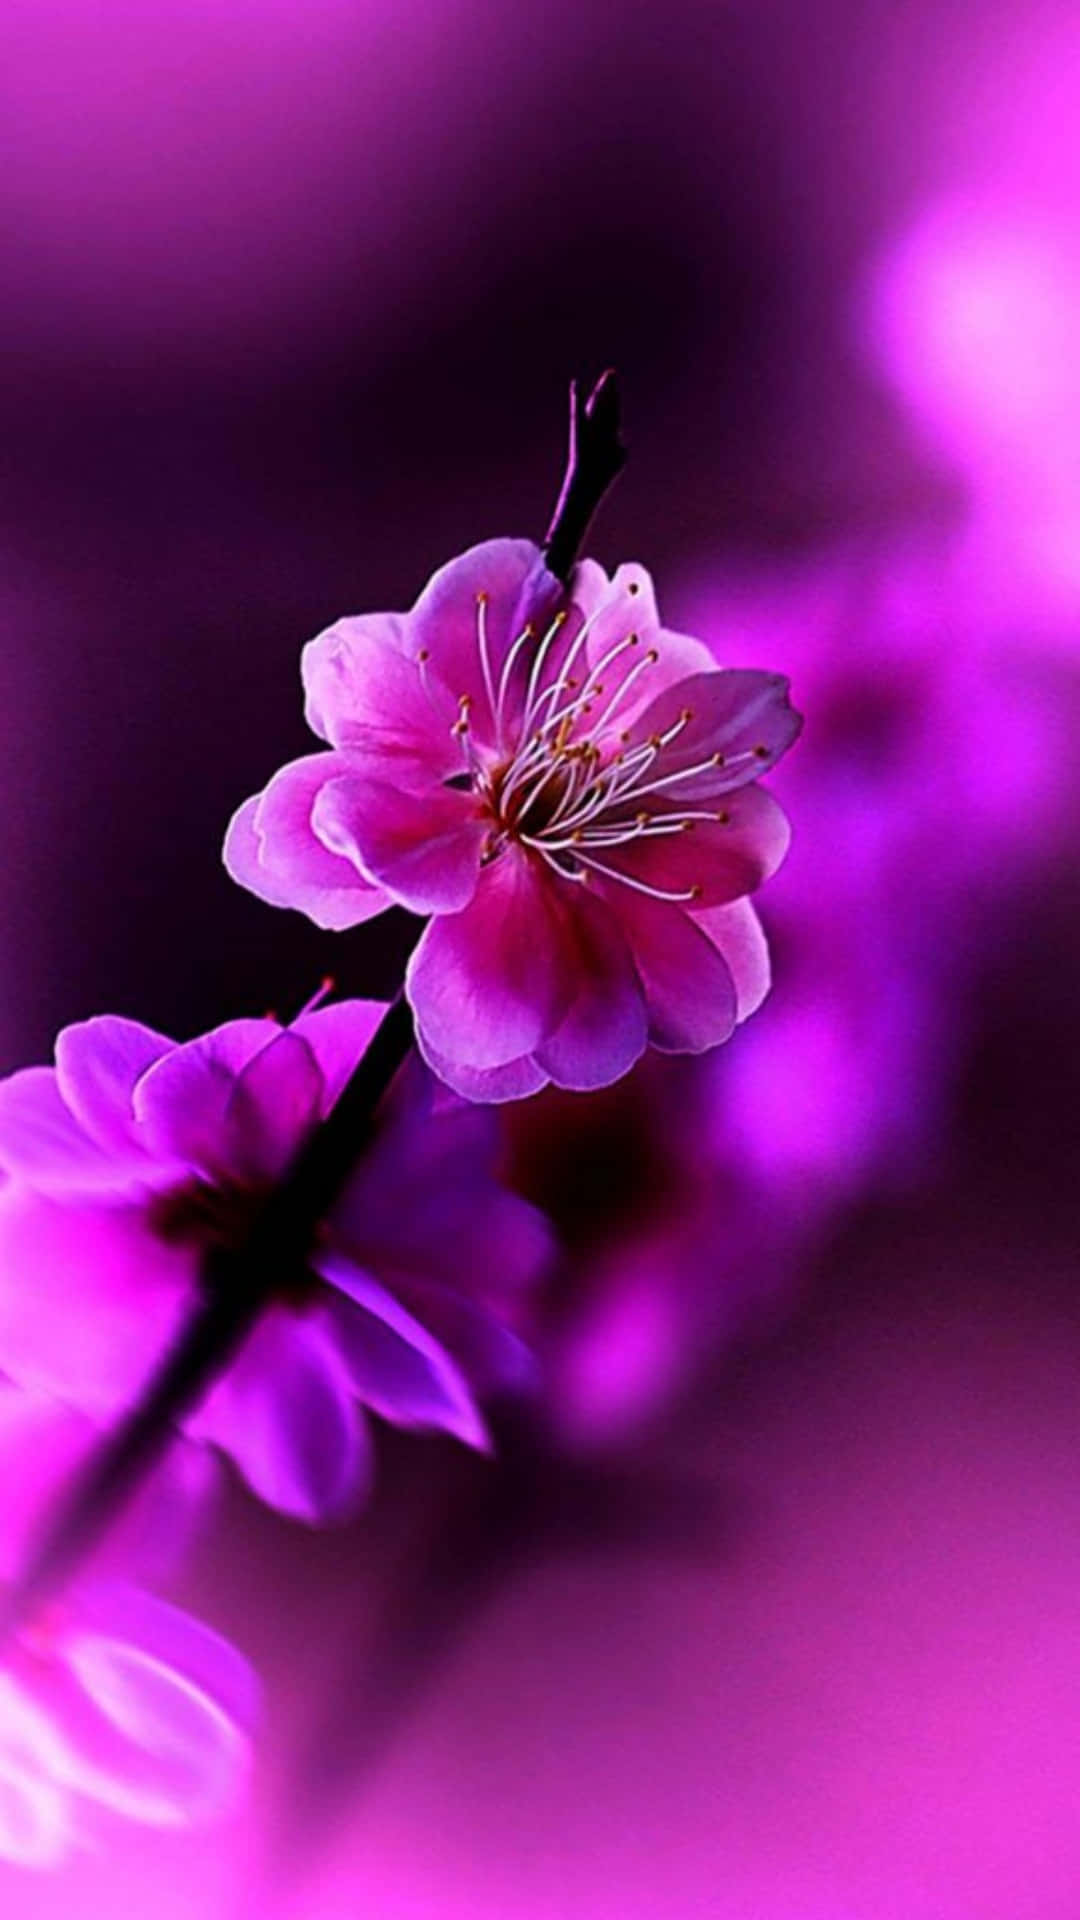 Vibrant Flower Close-up - iPhone Wallpaper